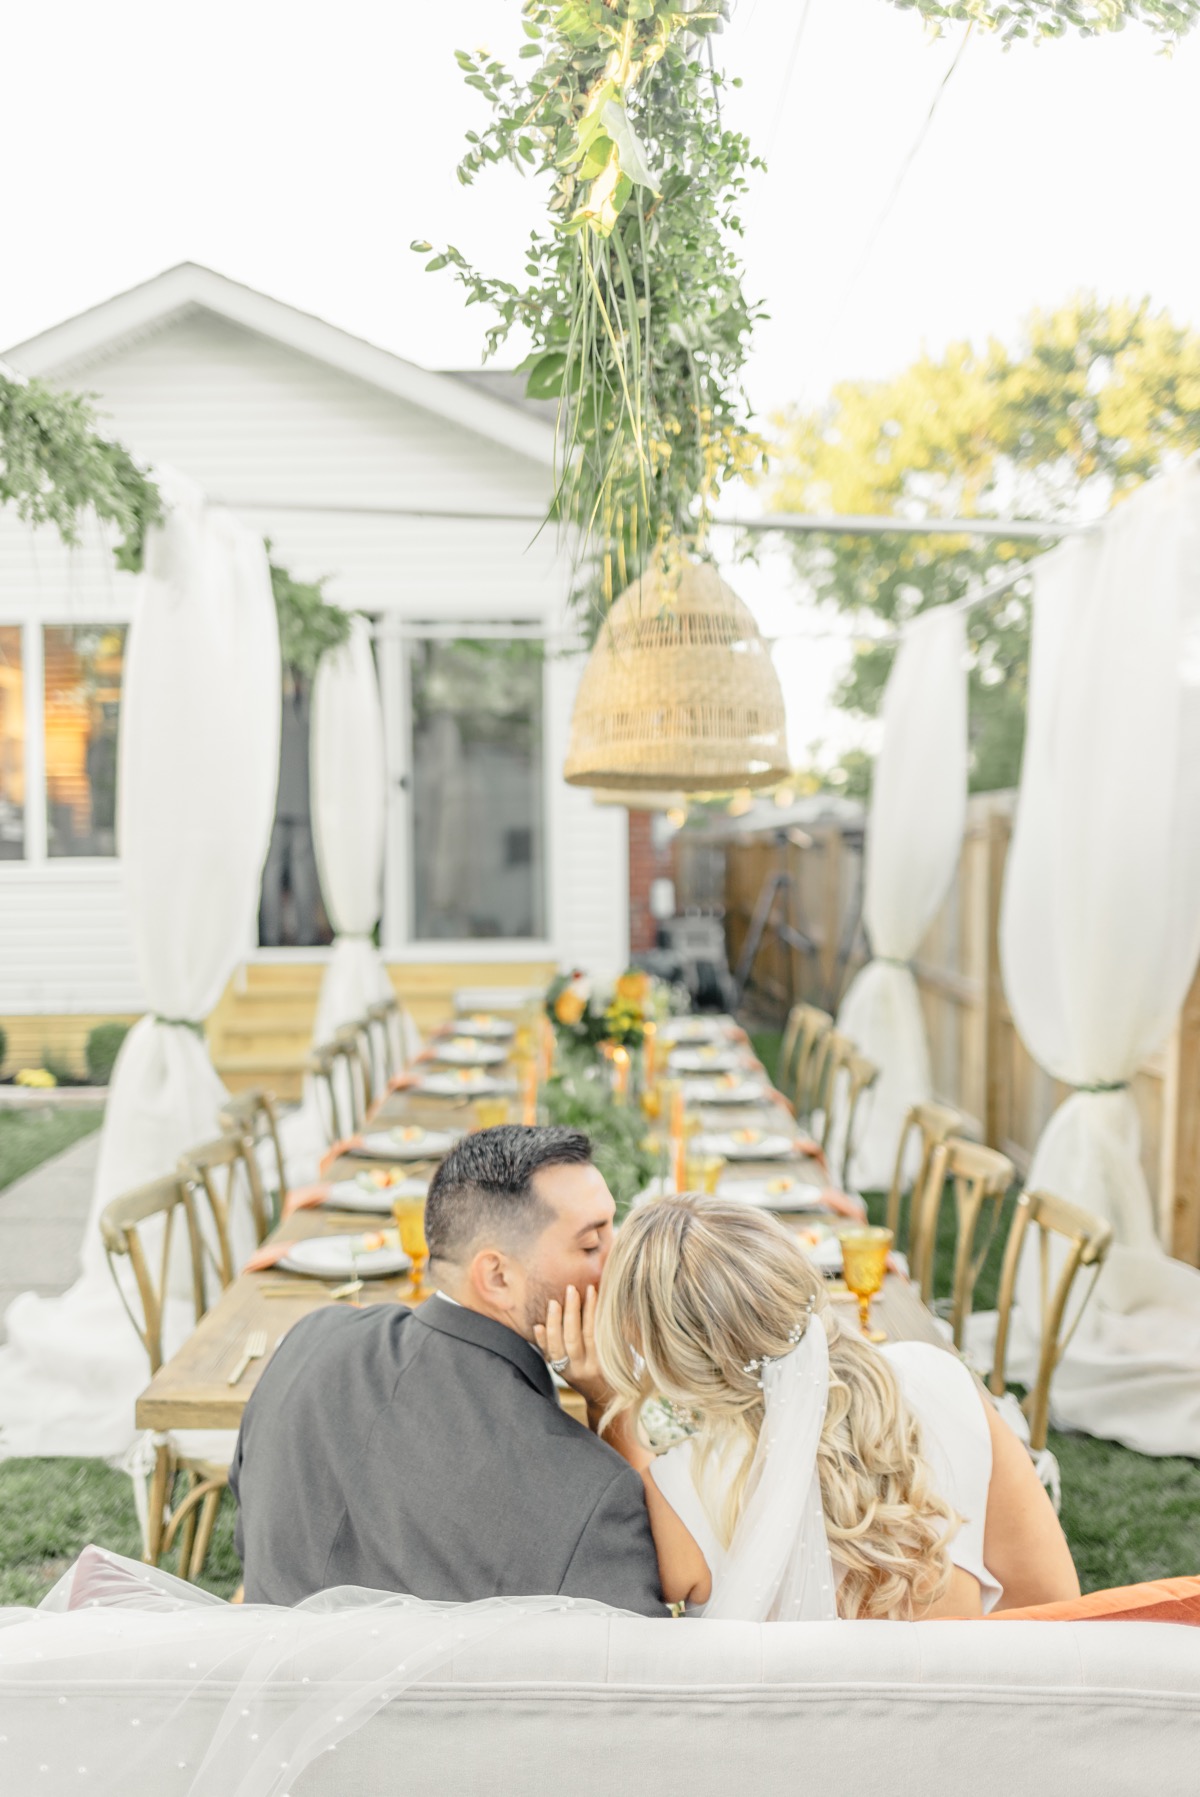 Romantic Fall Columbus Backyard Microwedding | Catherine Milliron Photography | Ohio and Destination Fine Art Wedding and Elopement Photographer